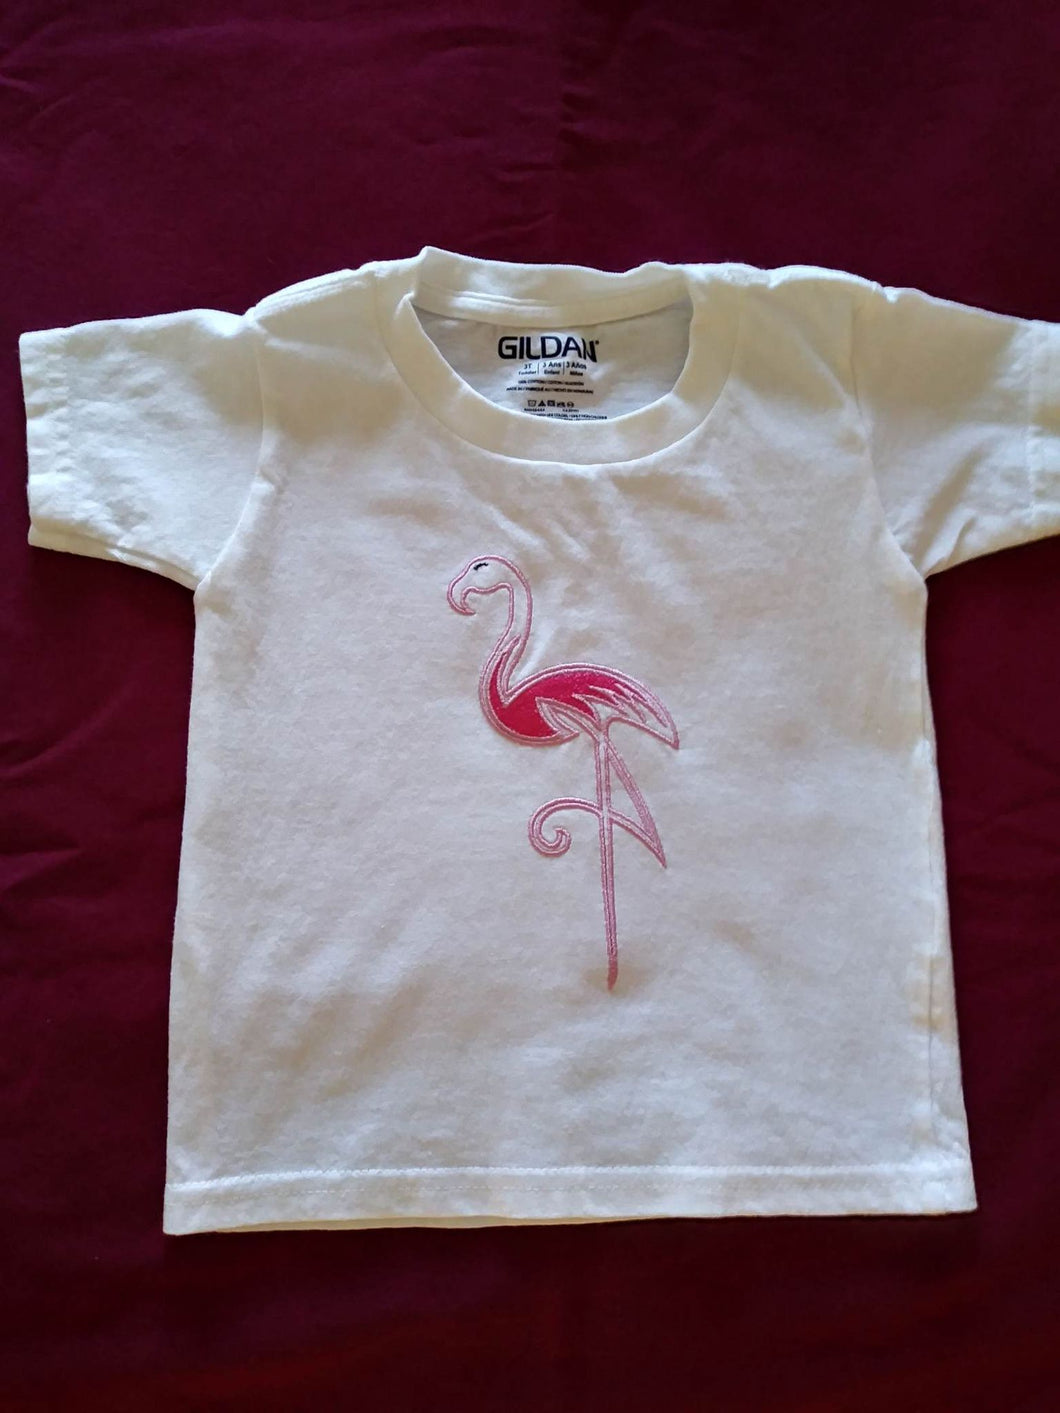 Flamingo independent design 3 sizes (4x4 , 4x6, 6x10) -Digital Embroidery Design